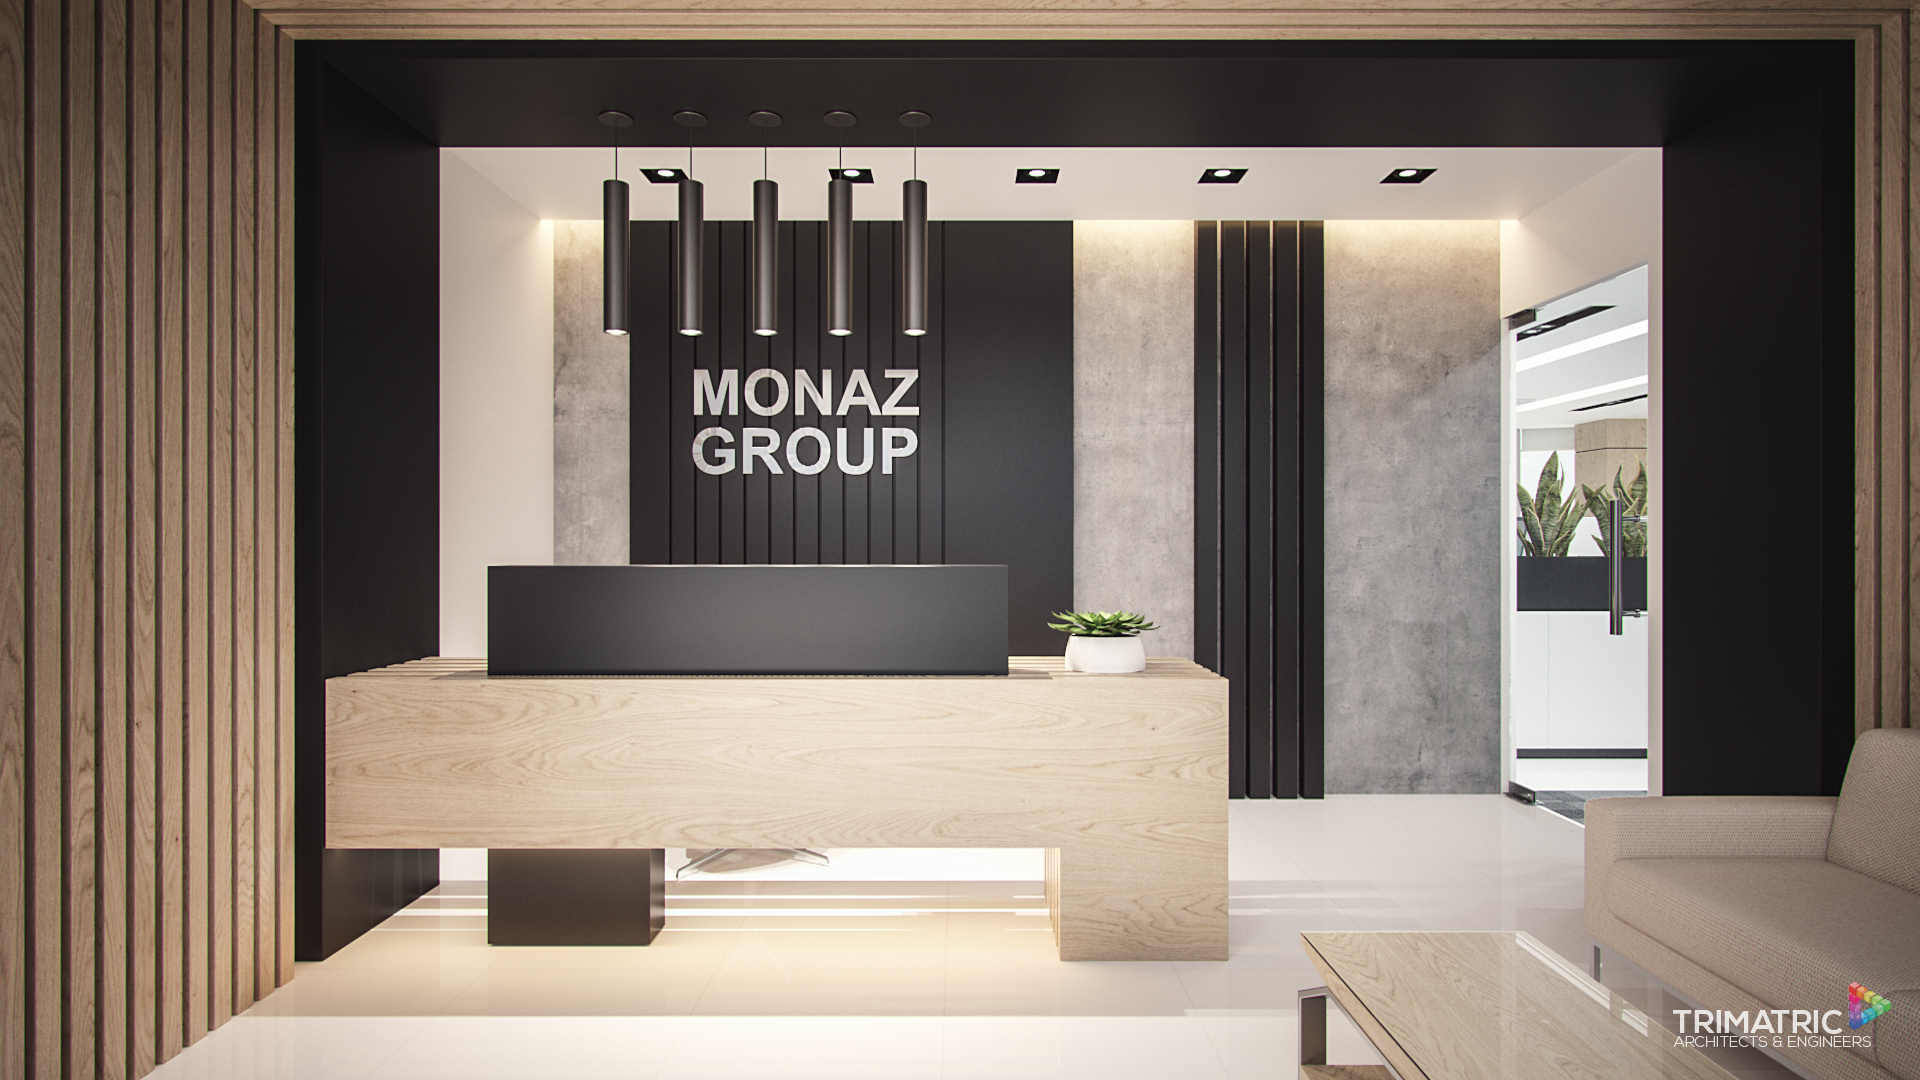 Monaz Group